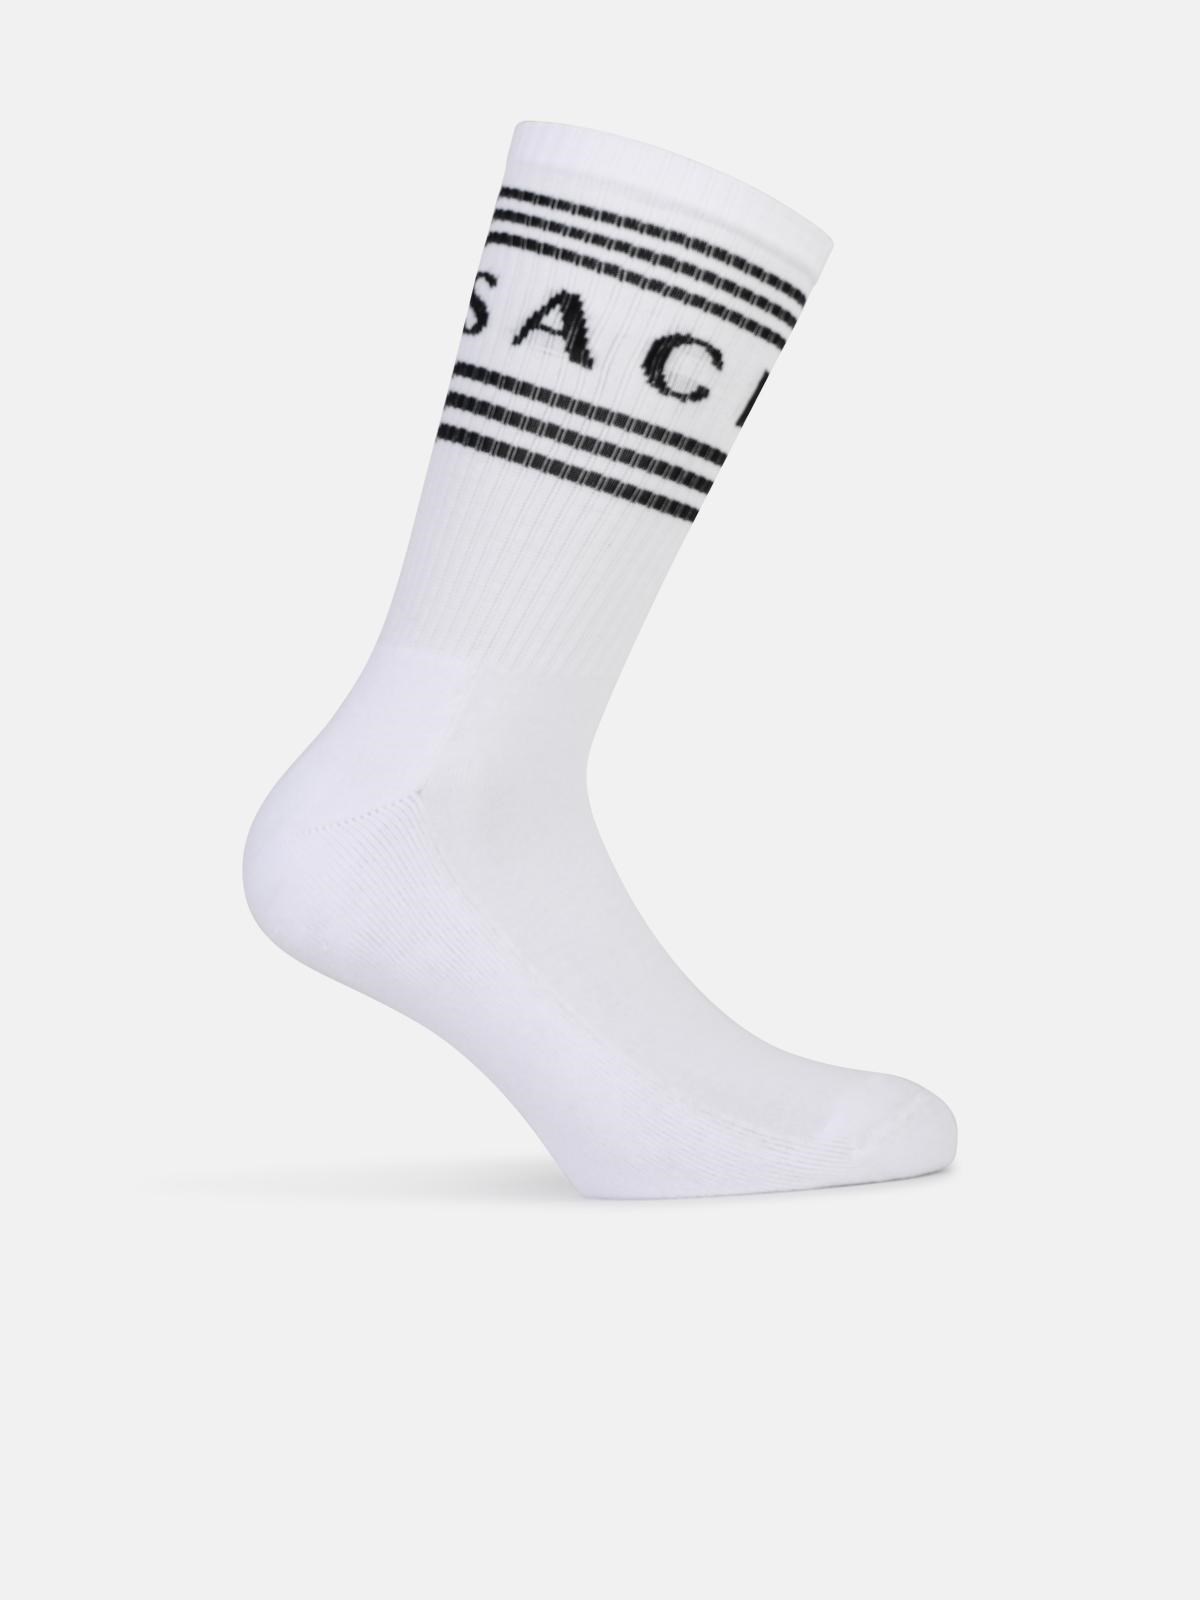 Versace White Cotton Socks